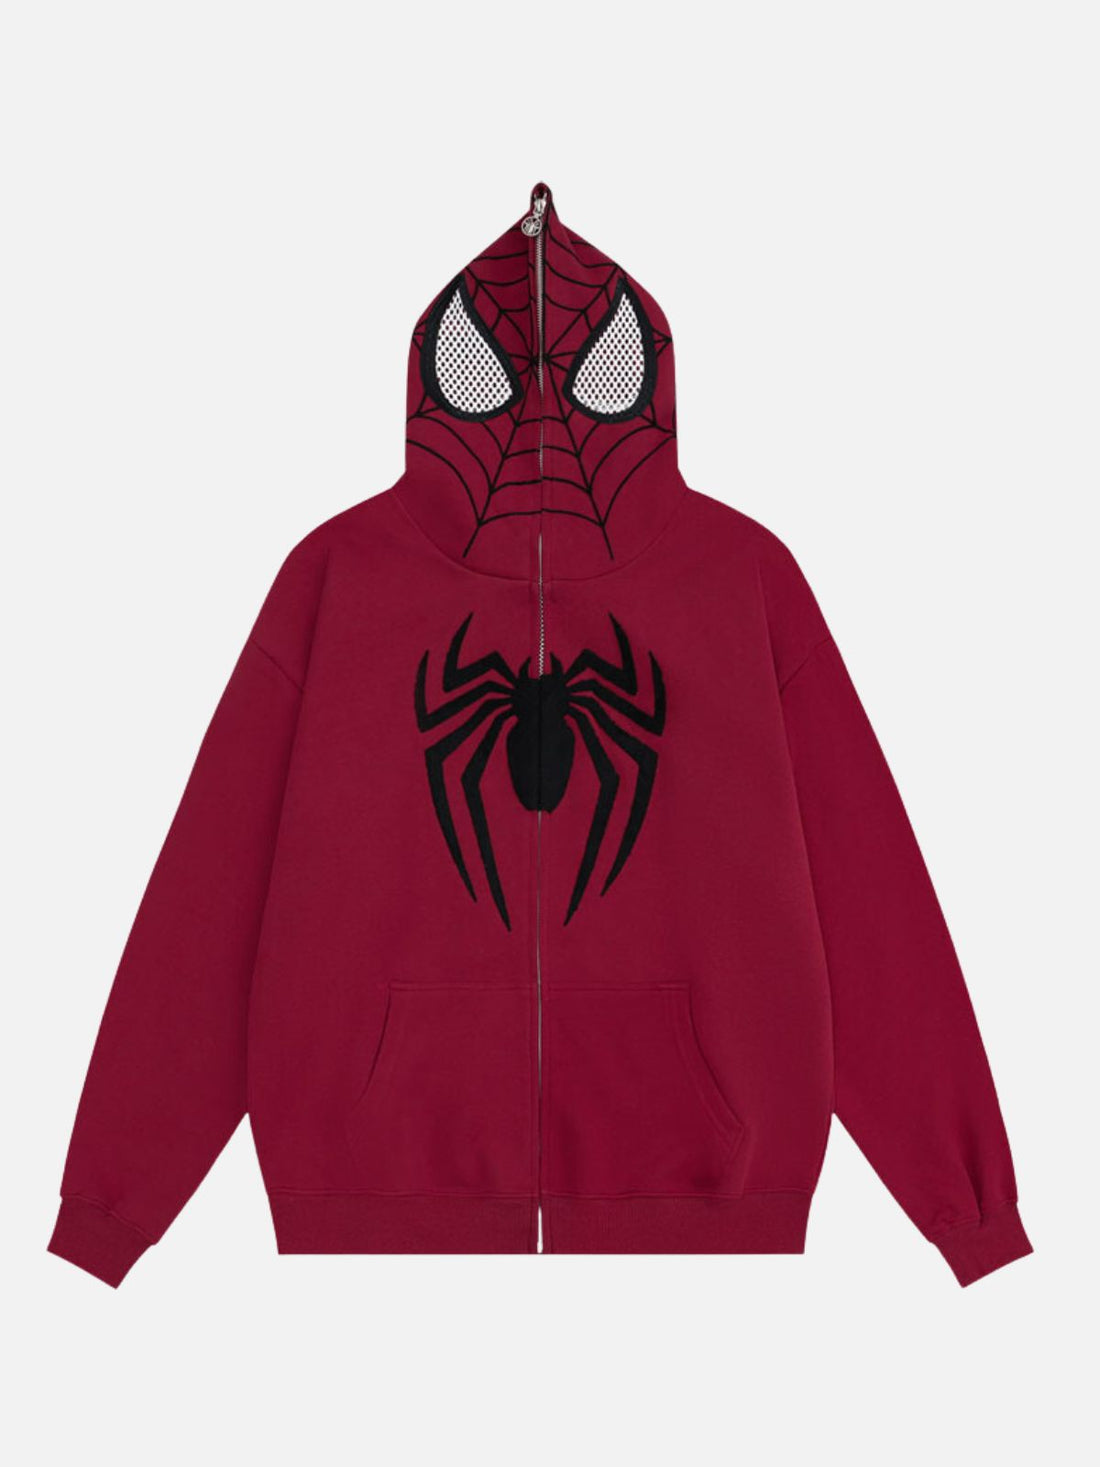 SPIDER - Embroidered Zip Up Hoodie Black | Teenwear.eu